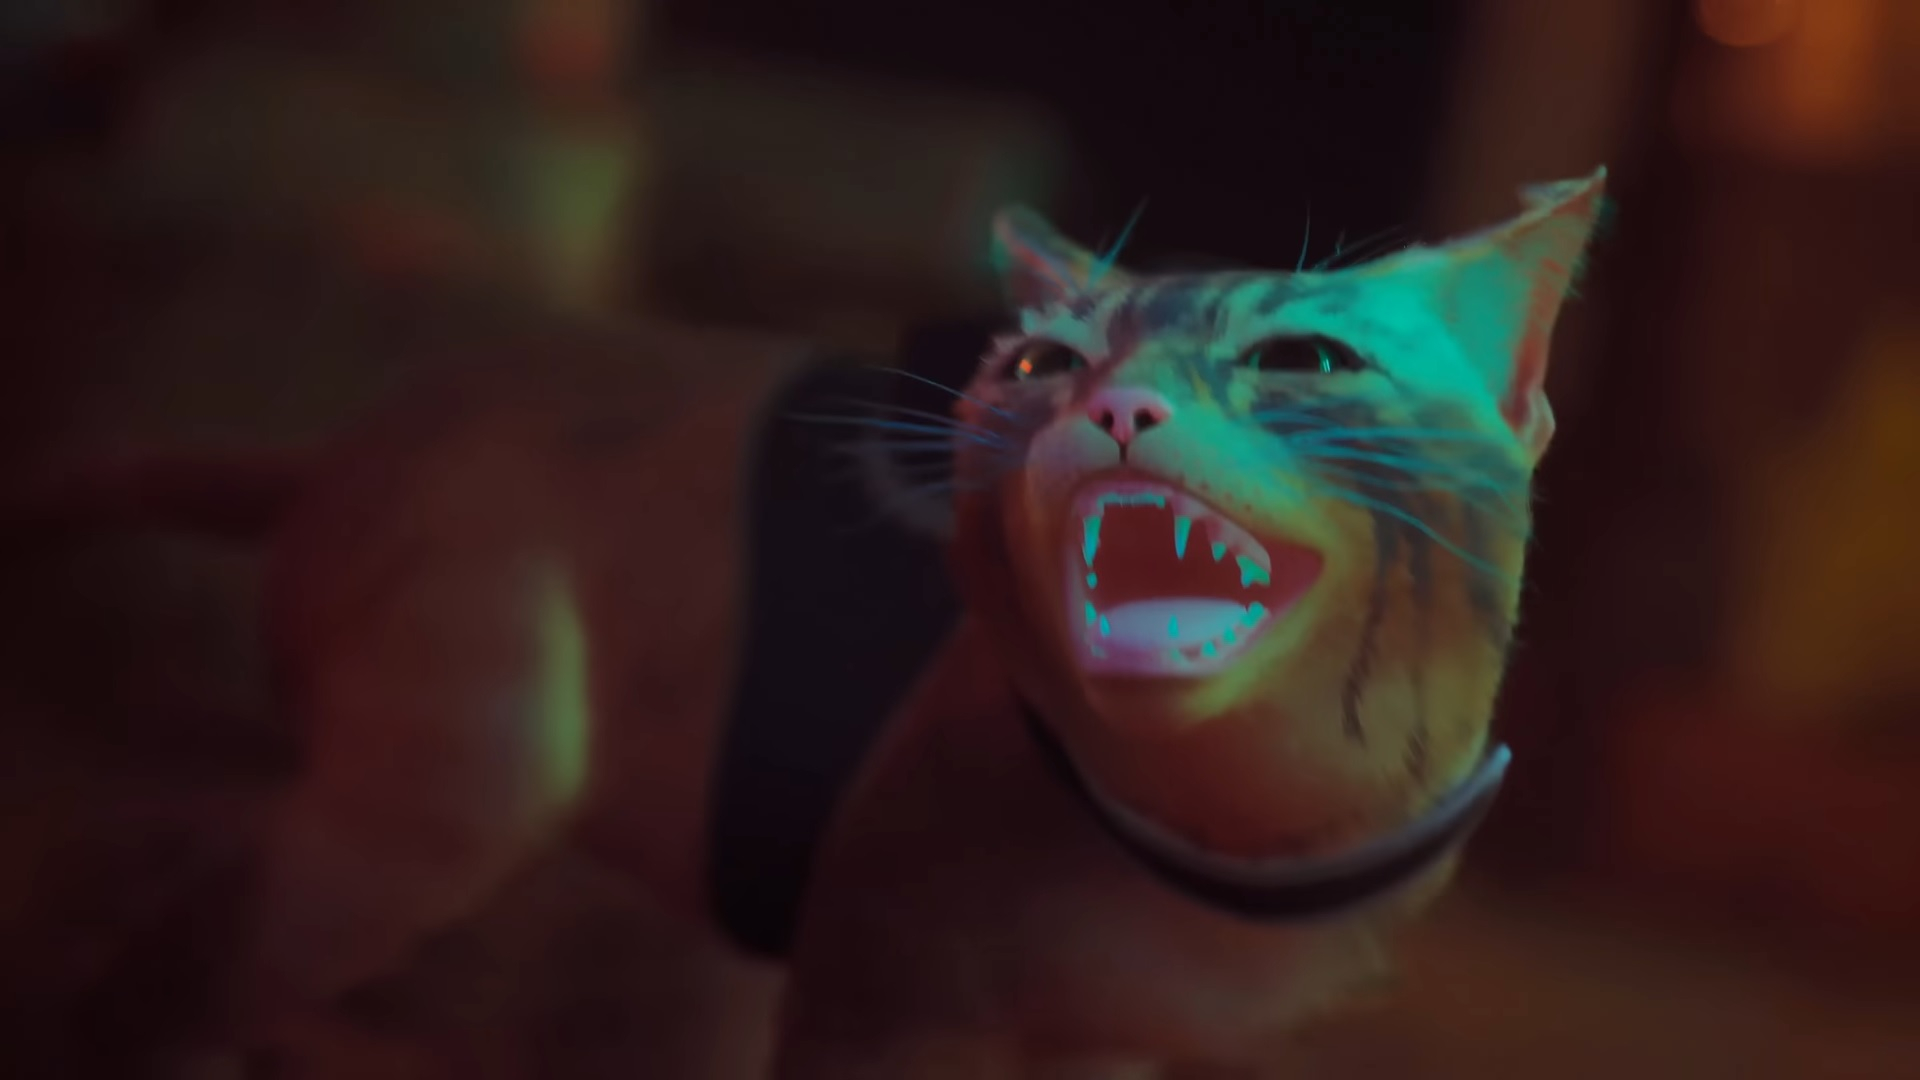 Игра про кота в мире киберпанка Stray вошла в топ-3 чарта Steam